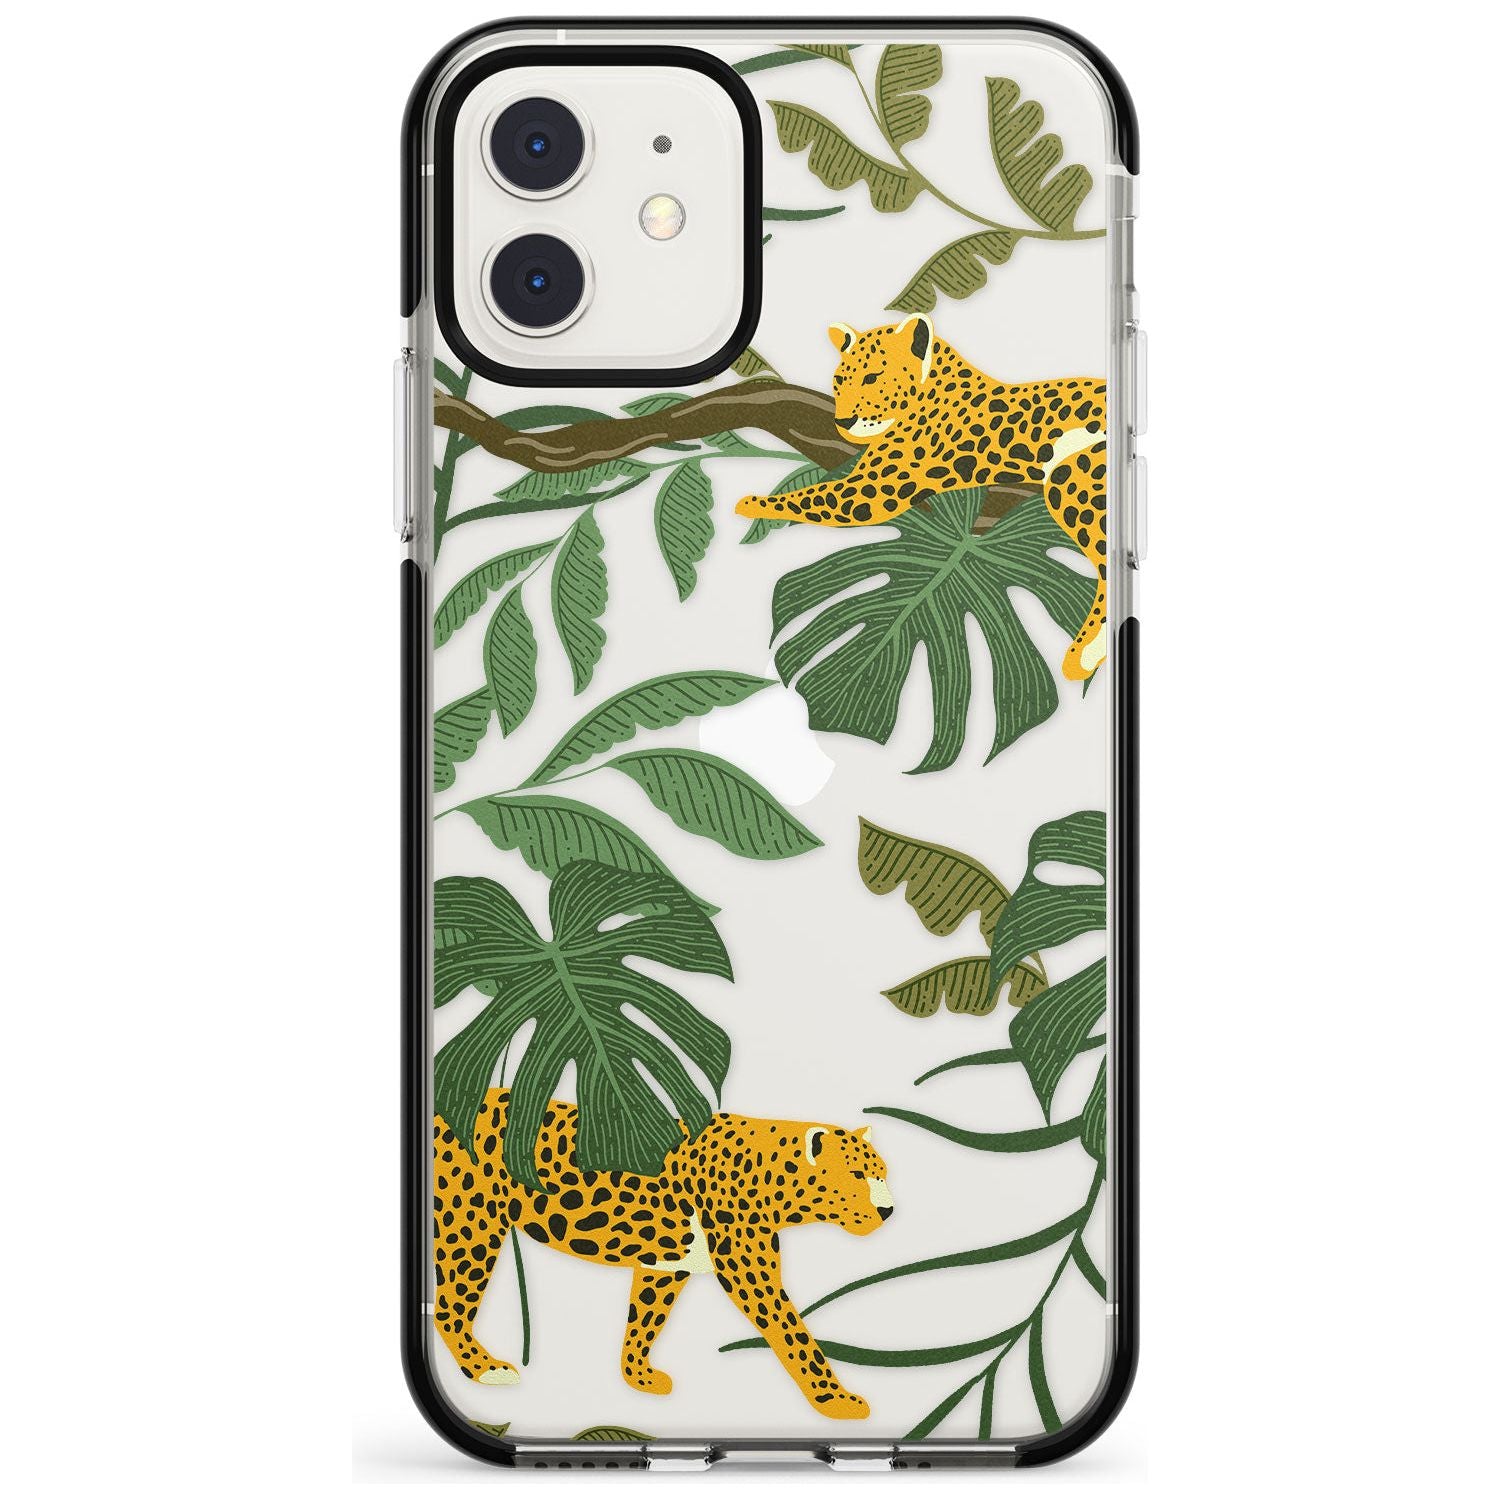 Two Jaguars & Foliage Jungle Cat Pattern Black Impact Phone Case for iPhone 11